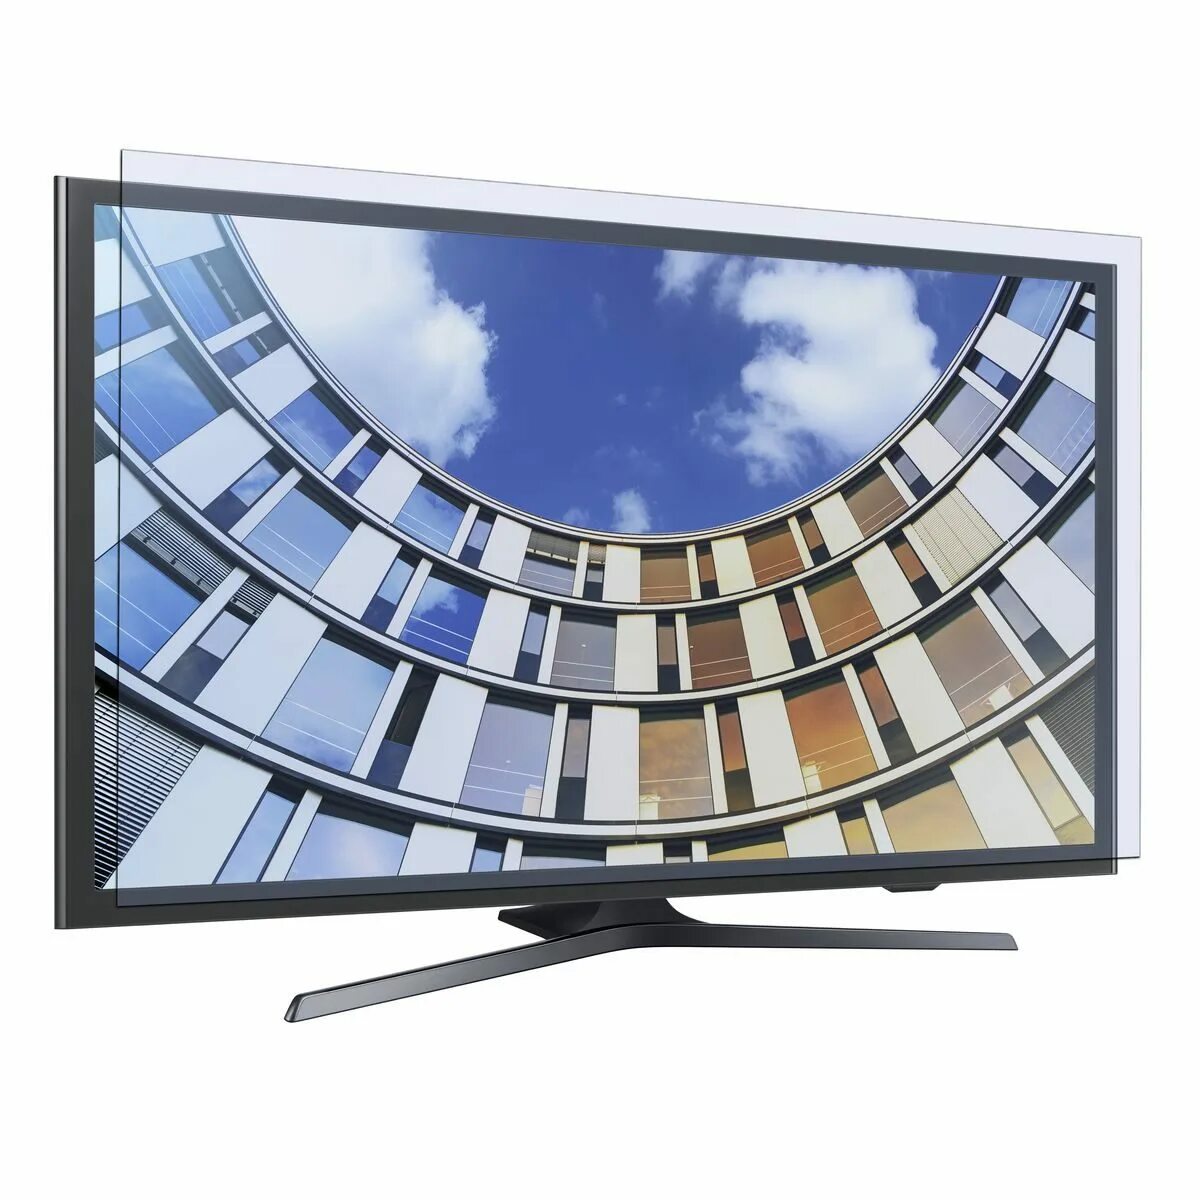 Samsung tv 32 дюймов. Samsung led 32 Smart TV. TV Samsung led 43. Samsung Smart TV 32 дюйма. Самсунг 5300 телевизор 32 дюйма.